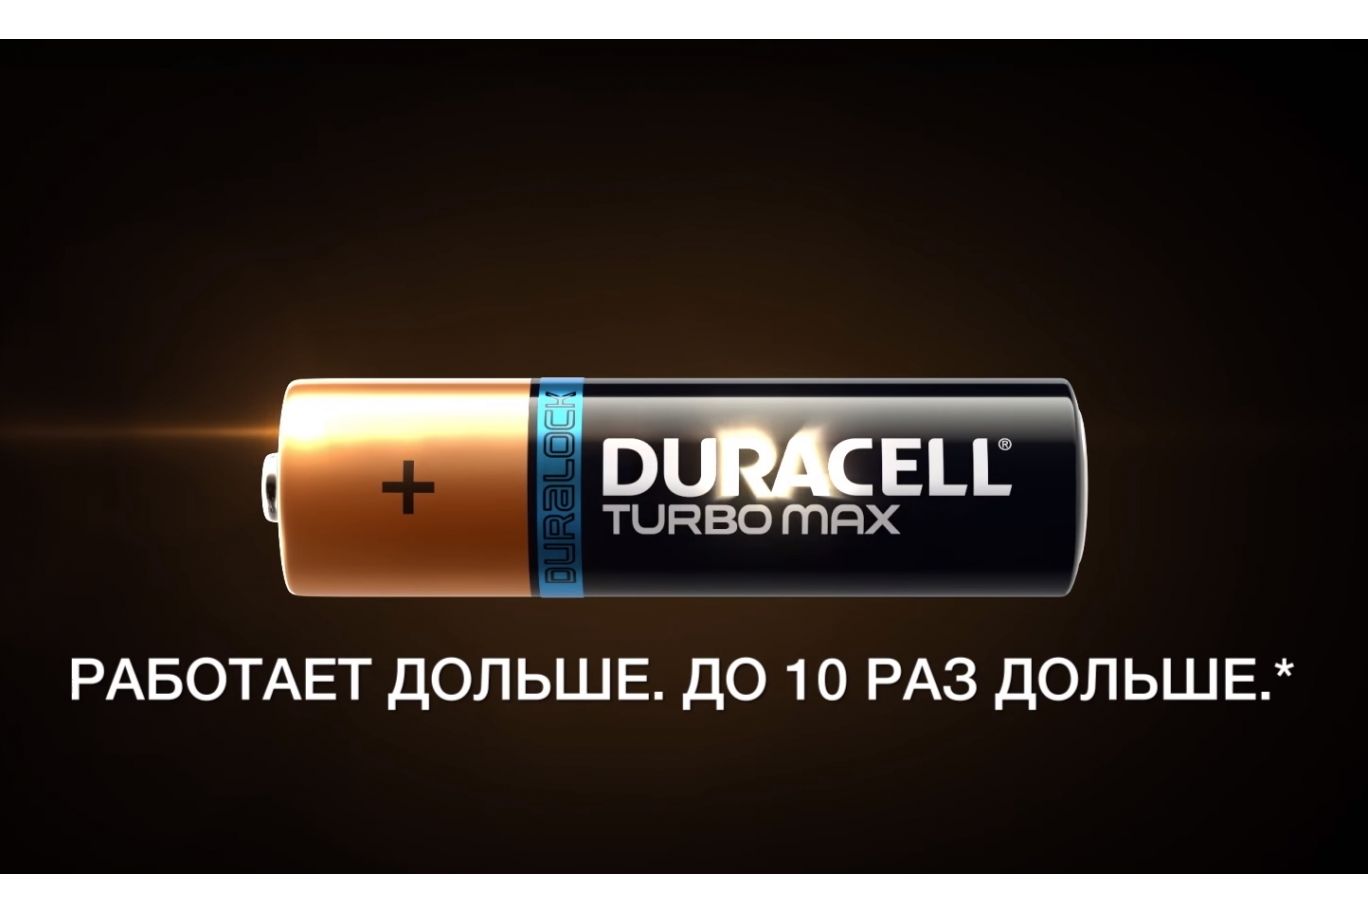 Второй раз дольше. Батарейки Duracell реклама. Батарейка Дюрасел реклама. Duracell слоган. Дюрасел слоган рекламный.